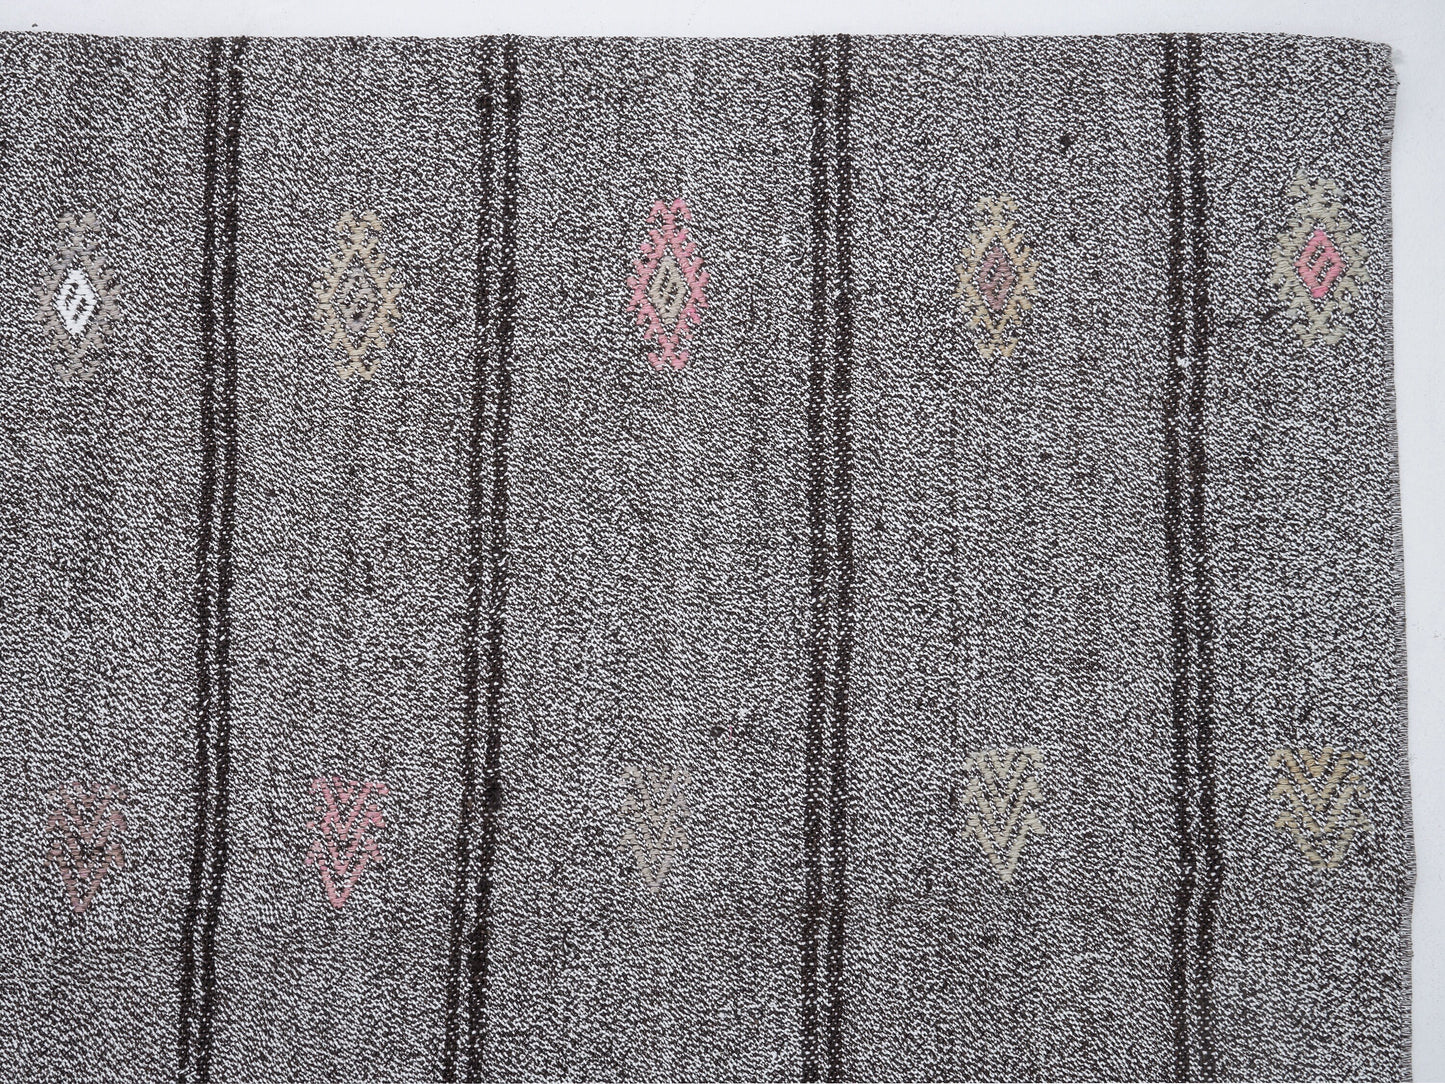 Turkish Handmade Kilim Rug, Vintage Black Striped Kilim Rug, Area Flat Weave Kilim Rug,Neutral Antique Rug, Gray Rug, Kilim Rug 6x7, 12203